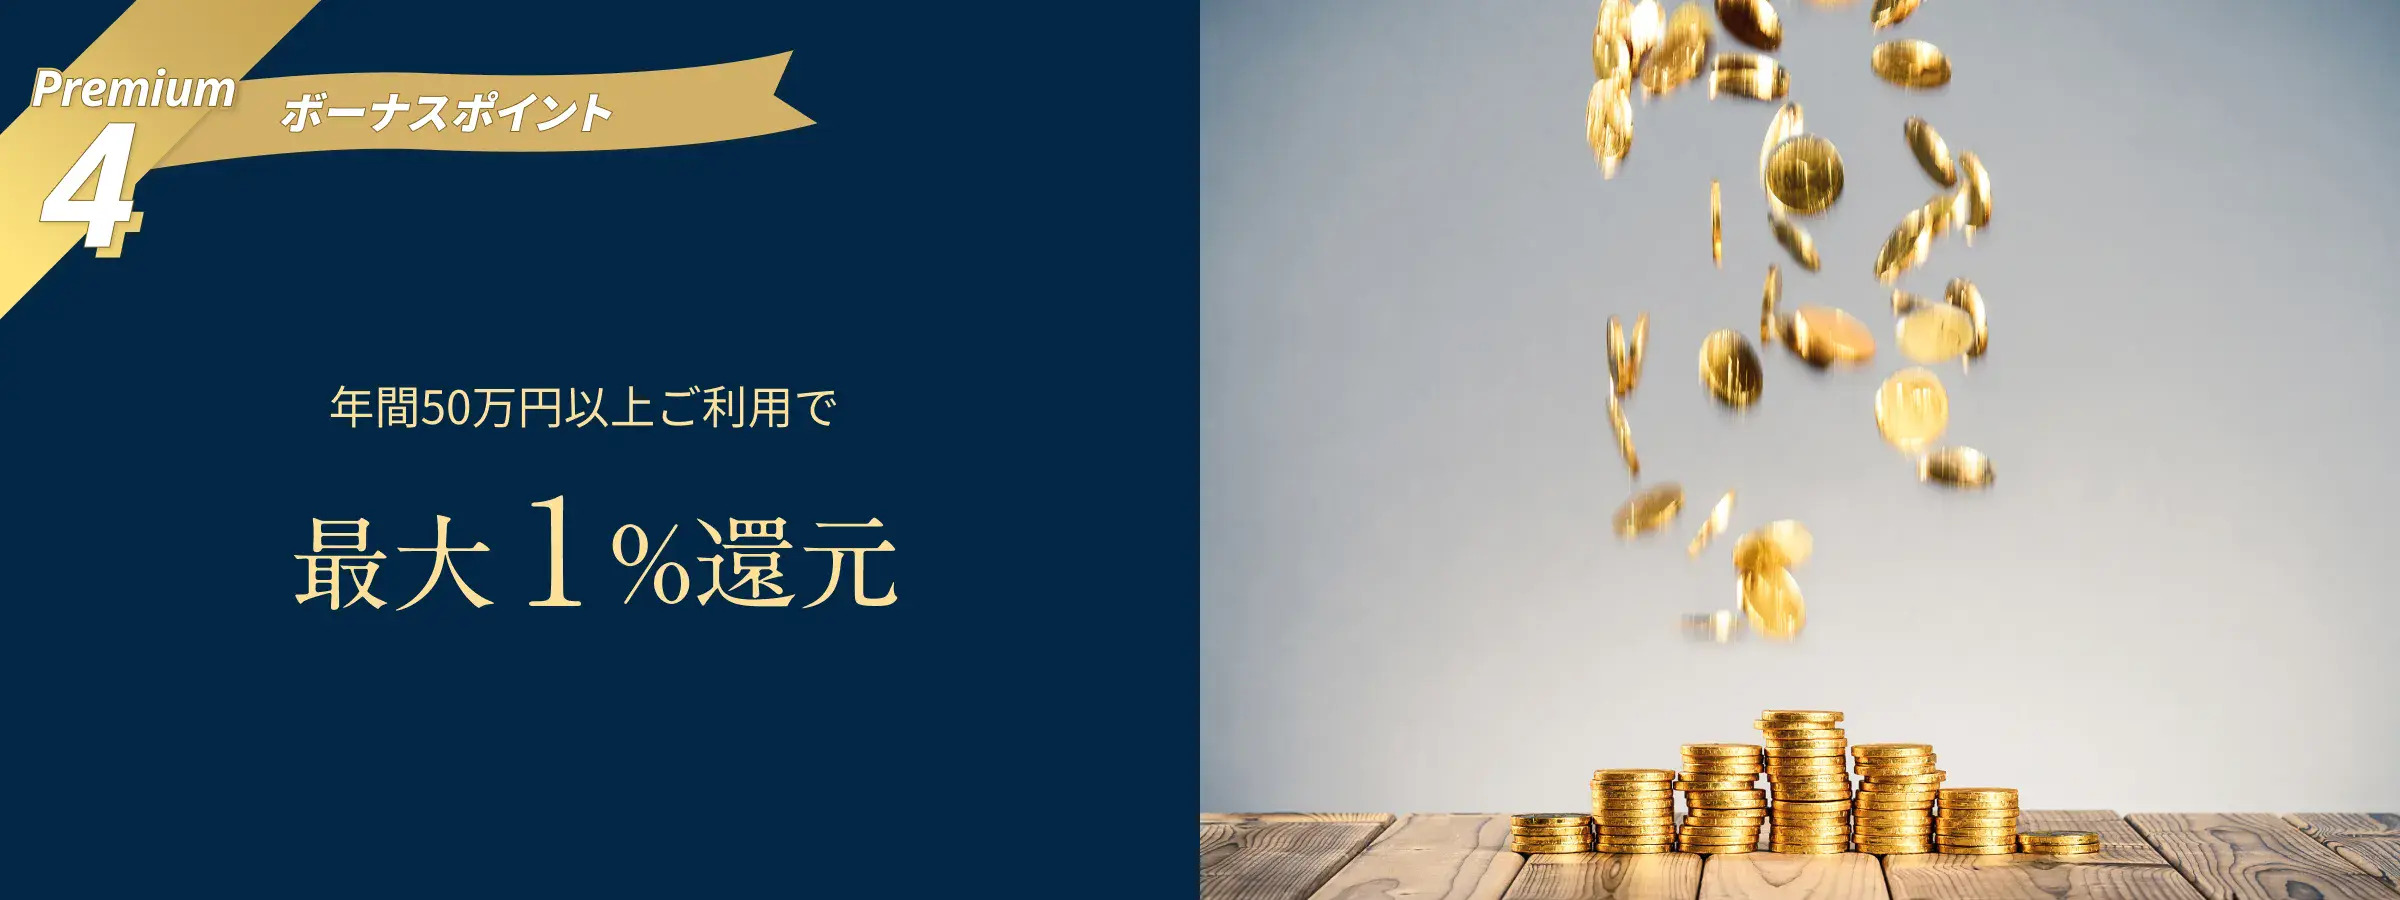 SAISON GOLD Premium が年間50万円利用でボーナスポイント！最大1.0%還元になるイメージバナー